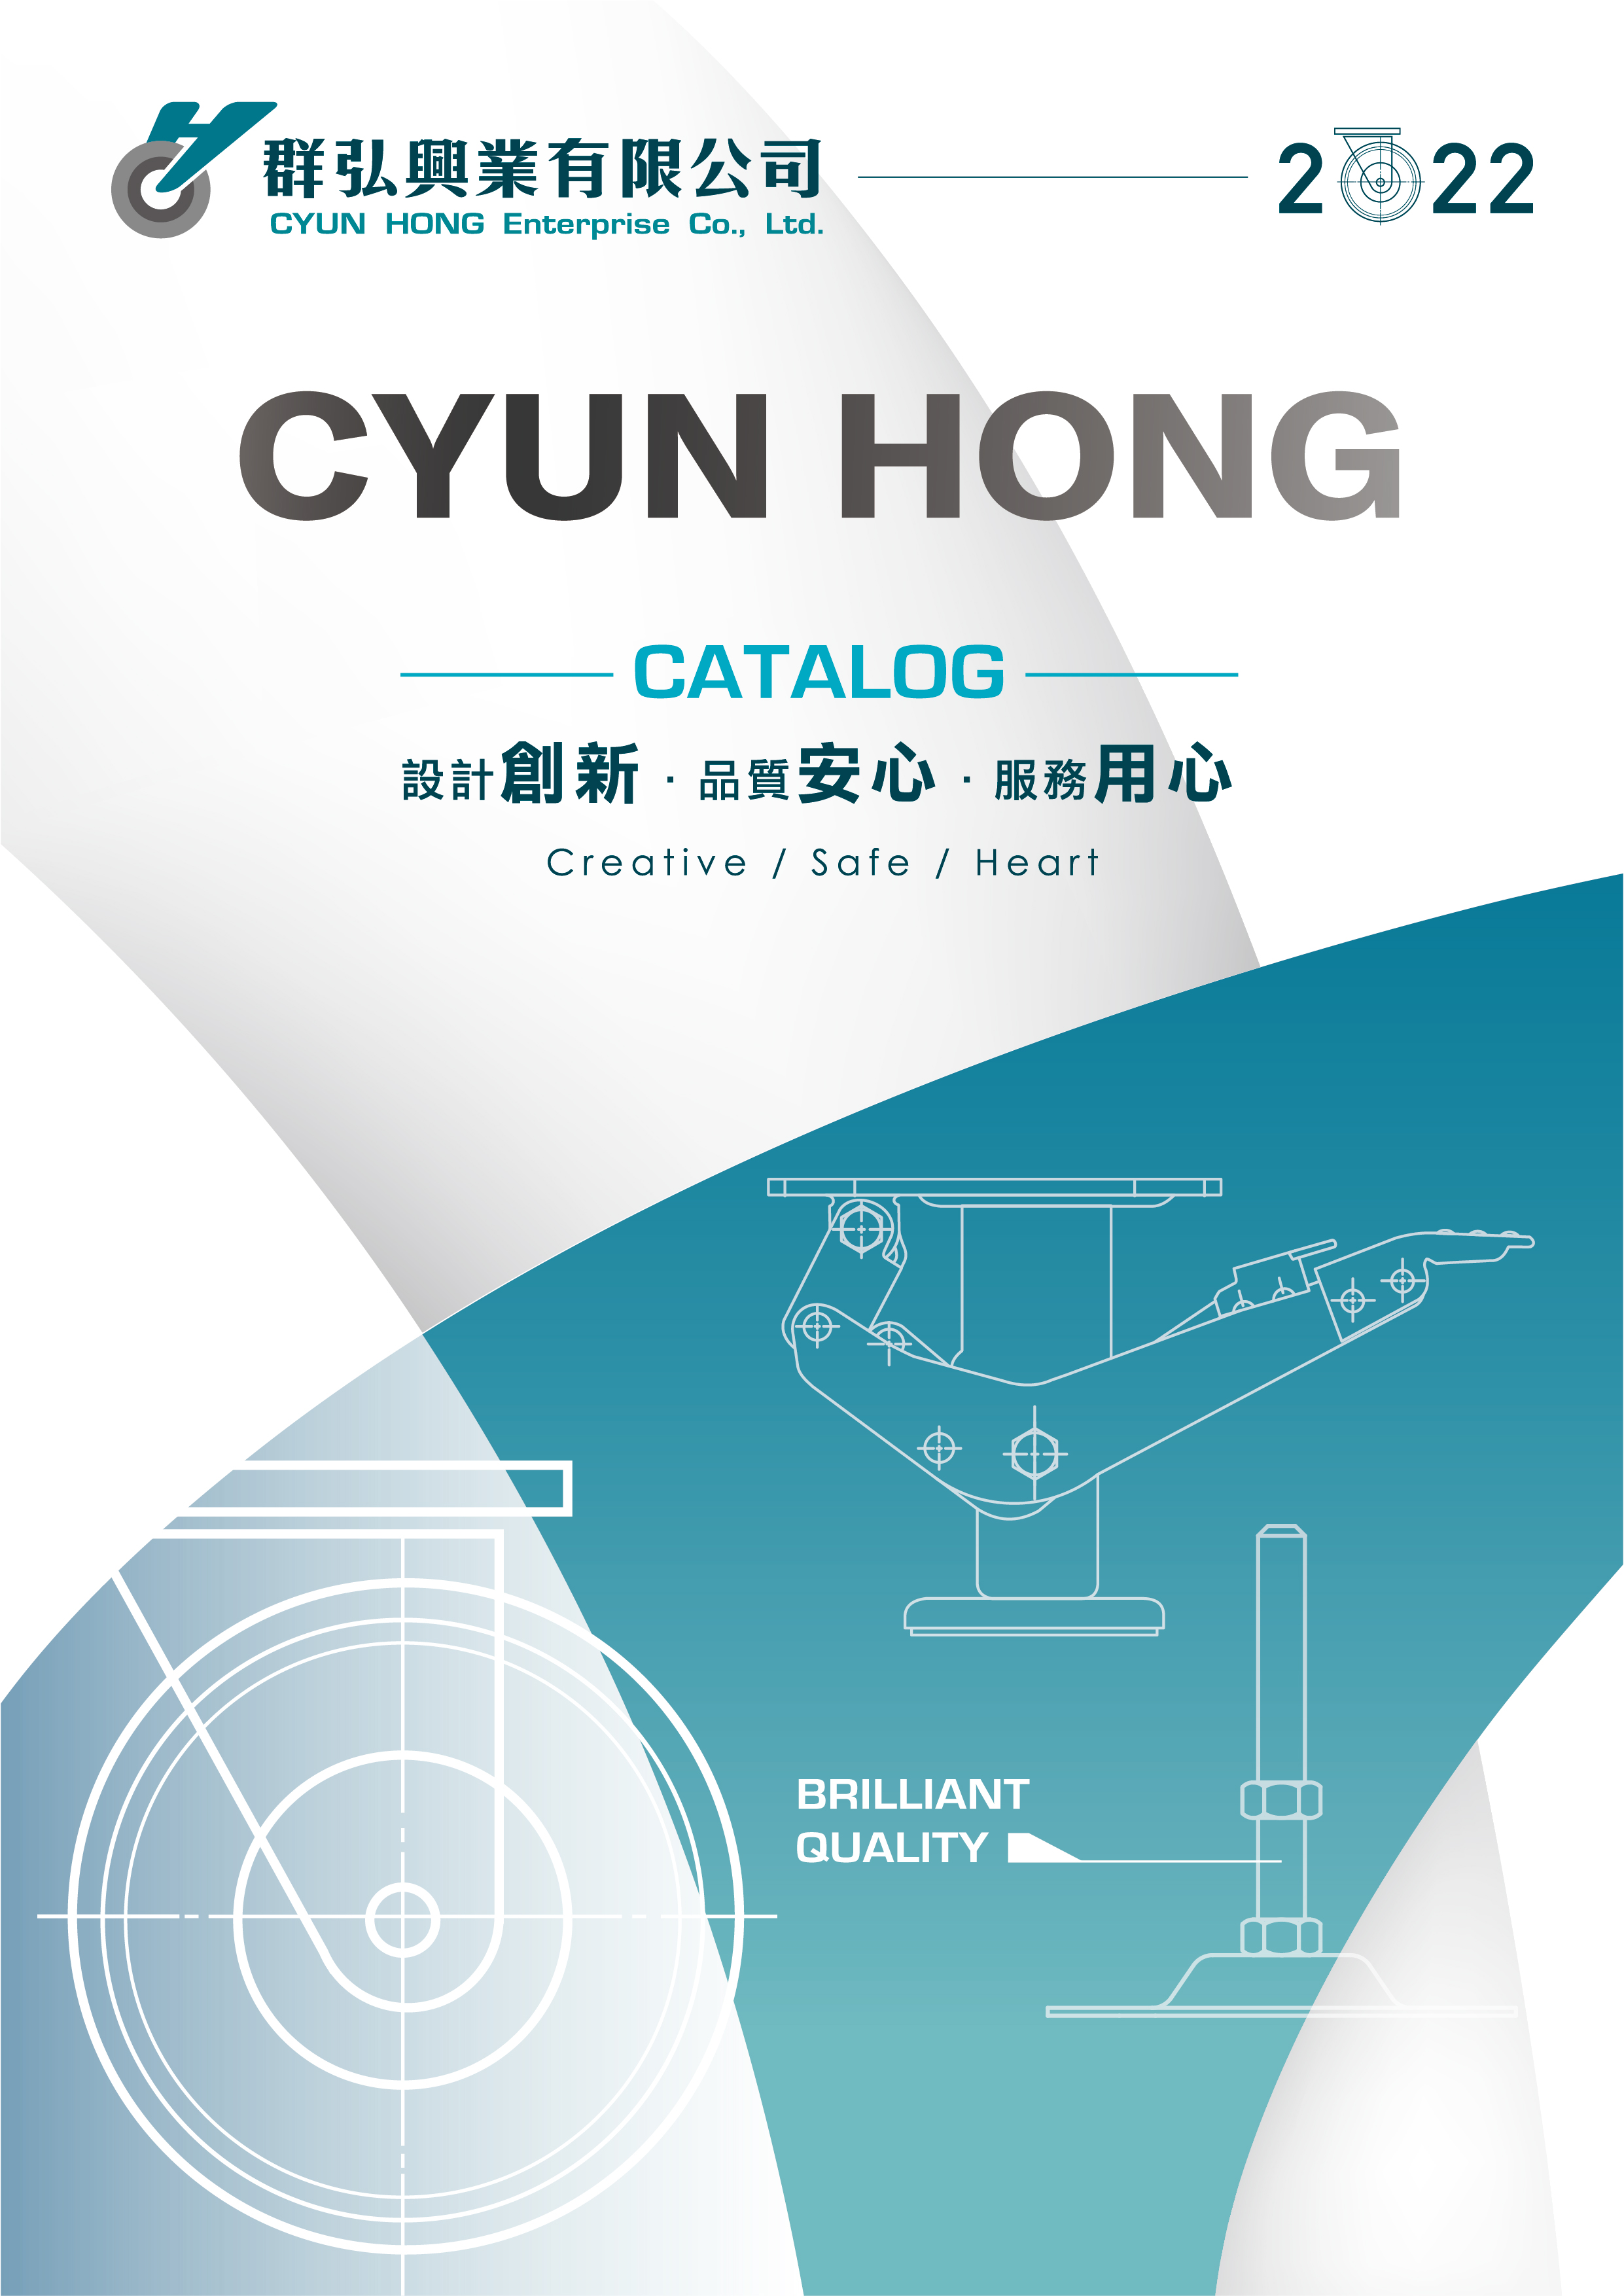 CYUN HONG ENTERPRISE CO., LTD. Online Catalogues